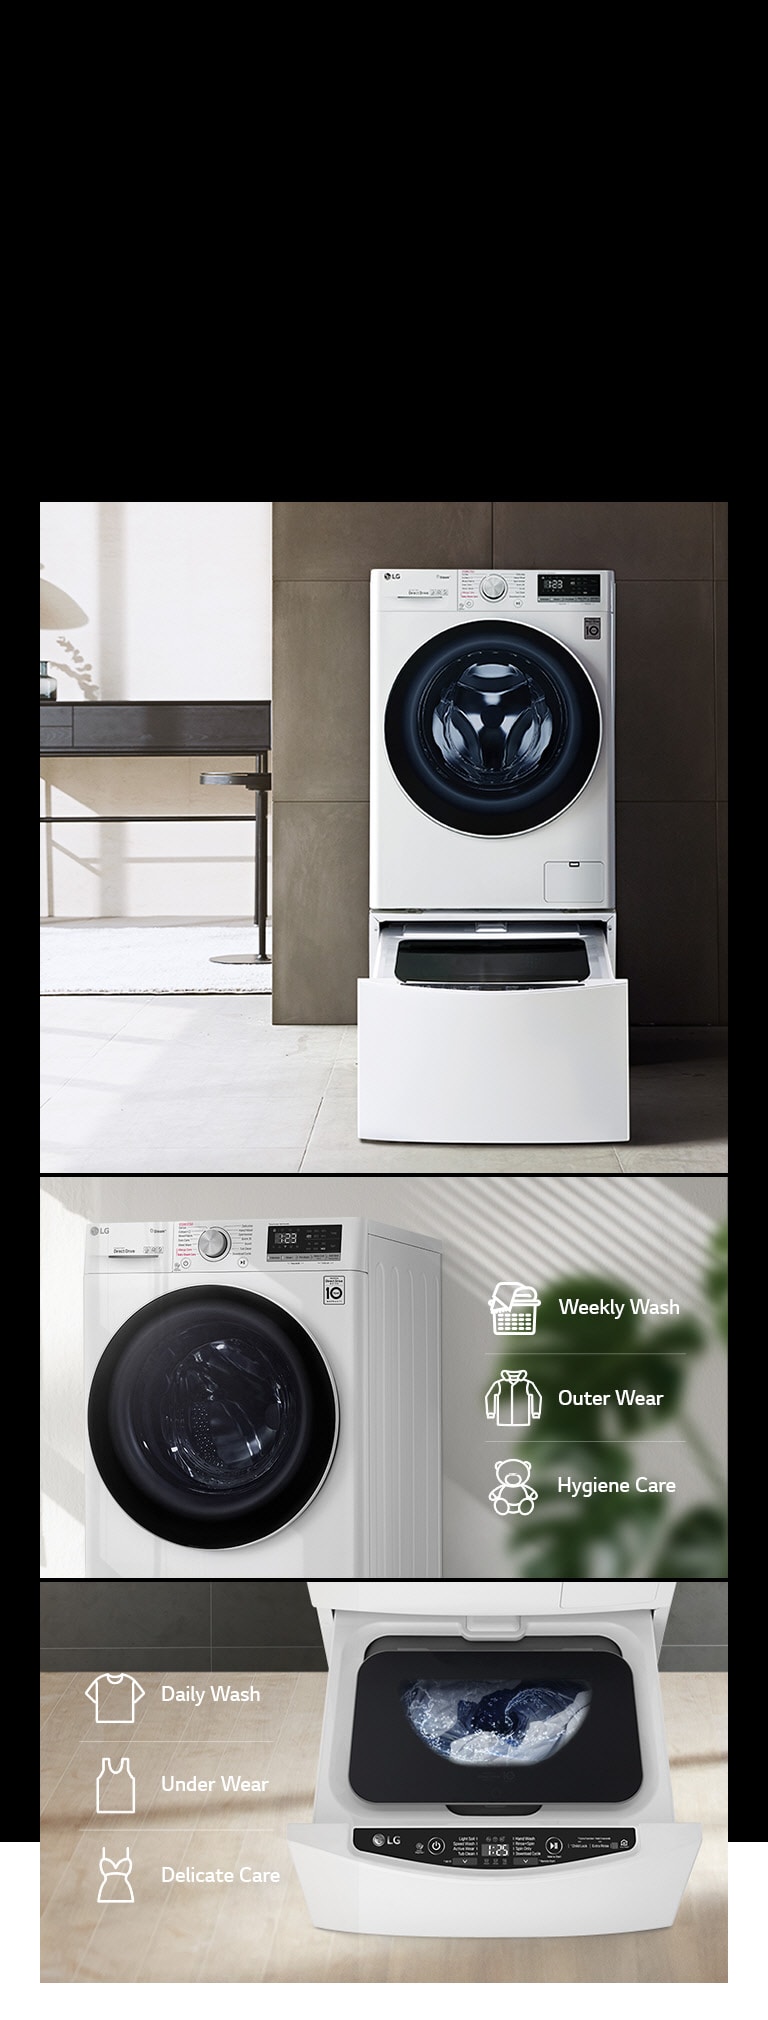 Advanced Laundry LG Machine: Care Washing F4V5VYP2T